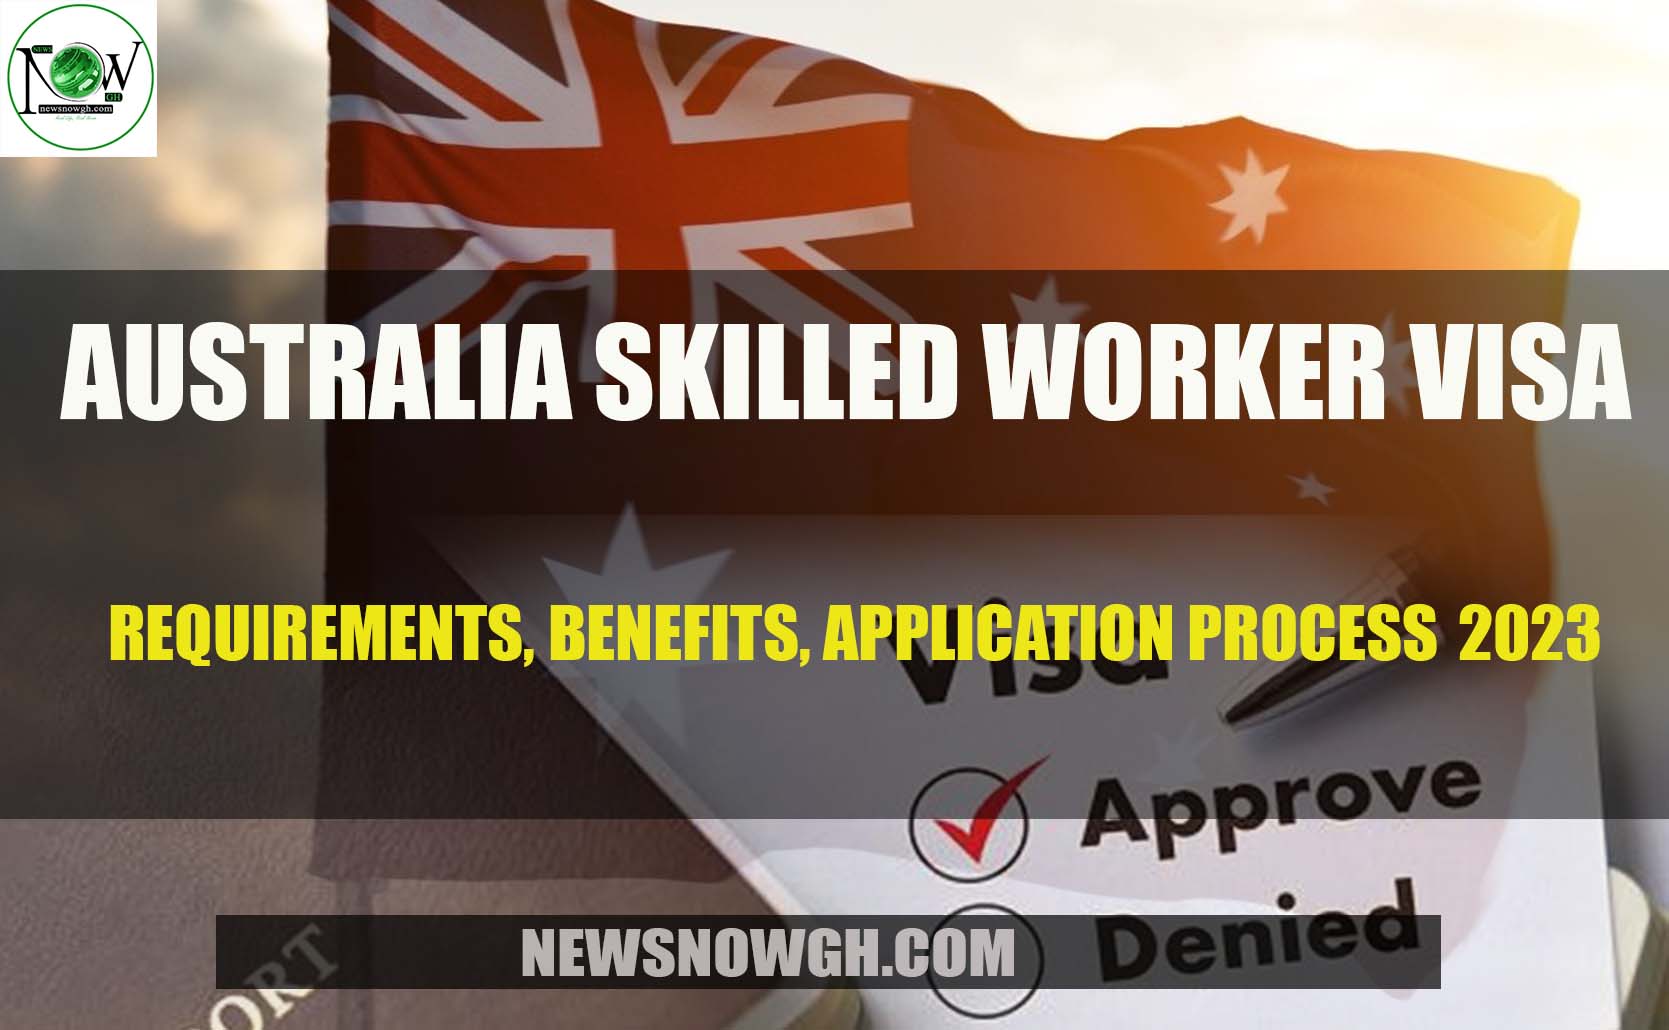 Australia Skilled Worker Visa Requirements, Benefits, Application